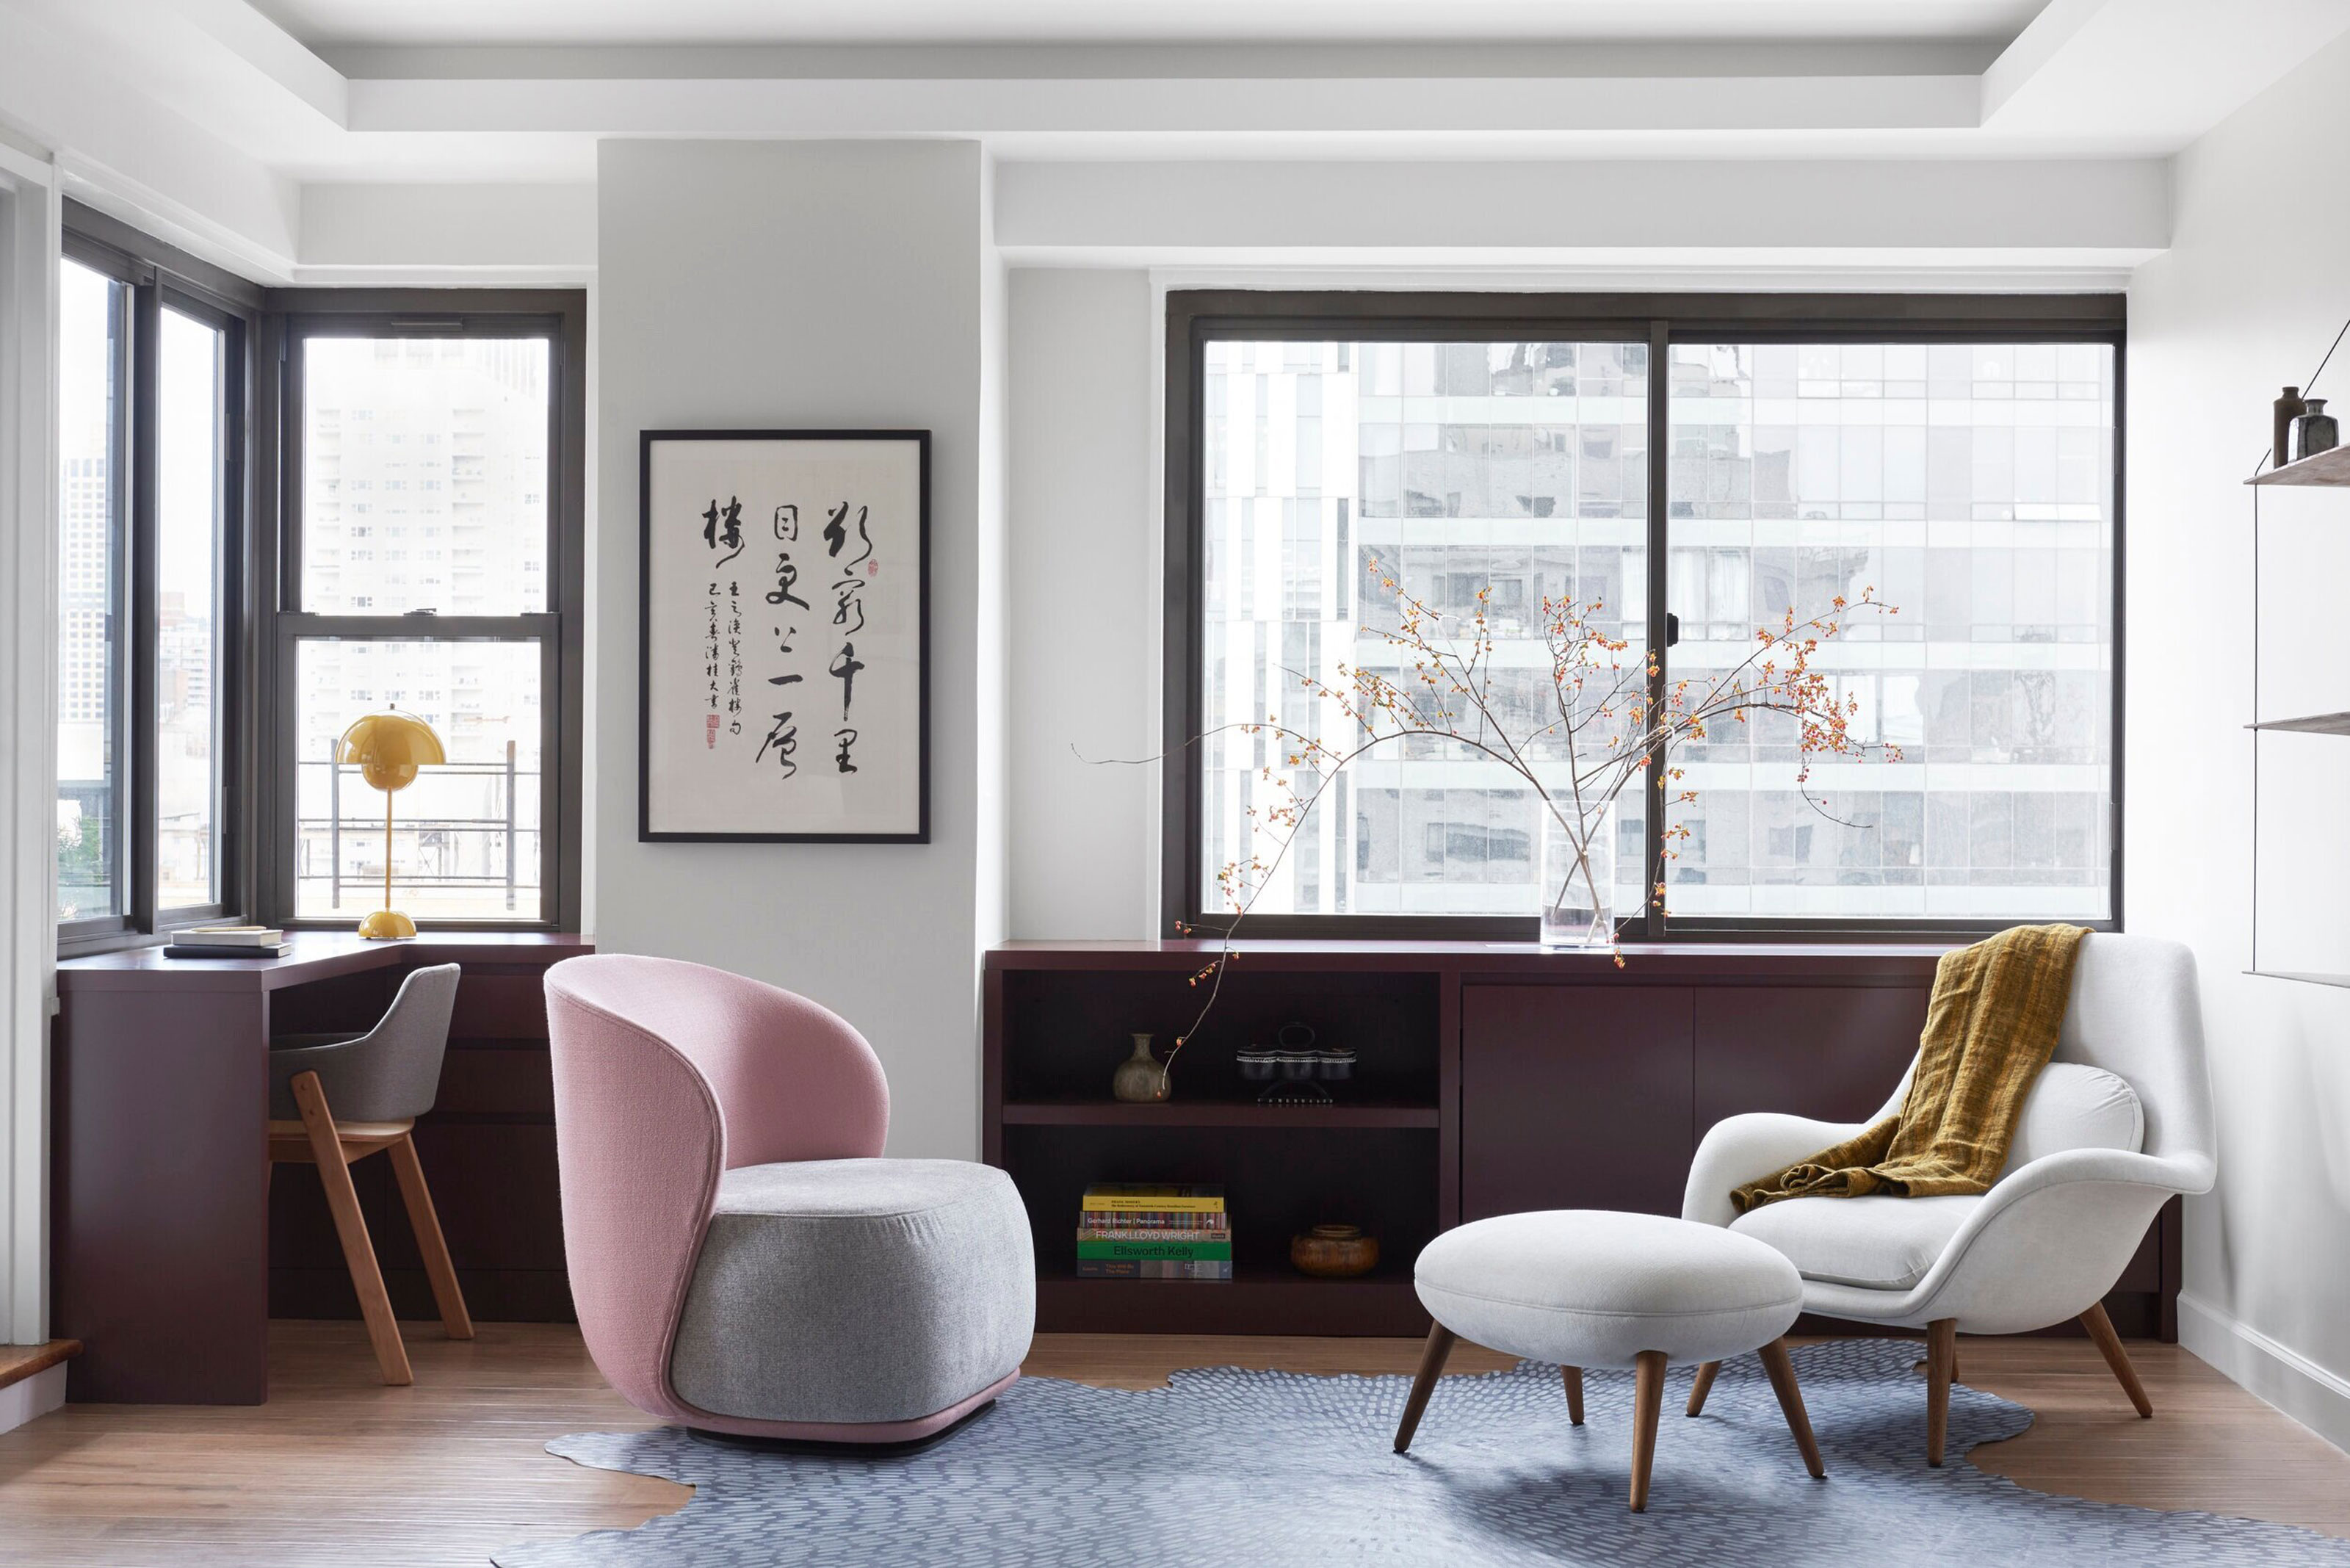 Architect's MODERN Home Office & Desk Setup Makeover 2023 